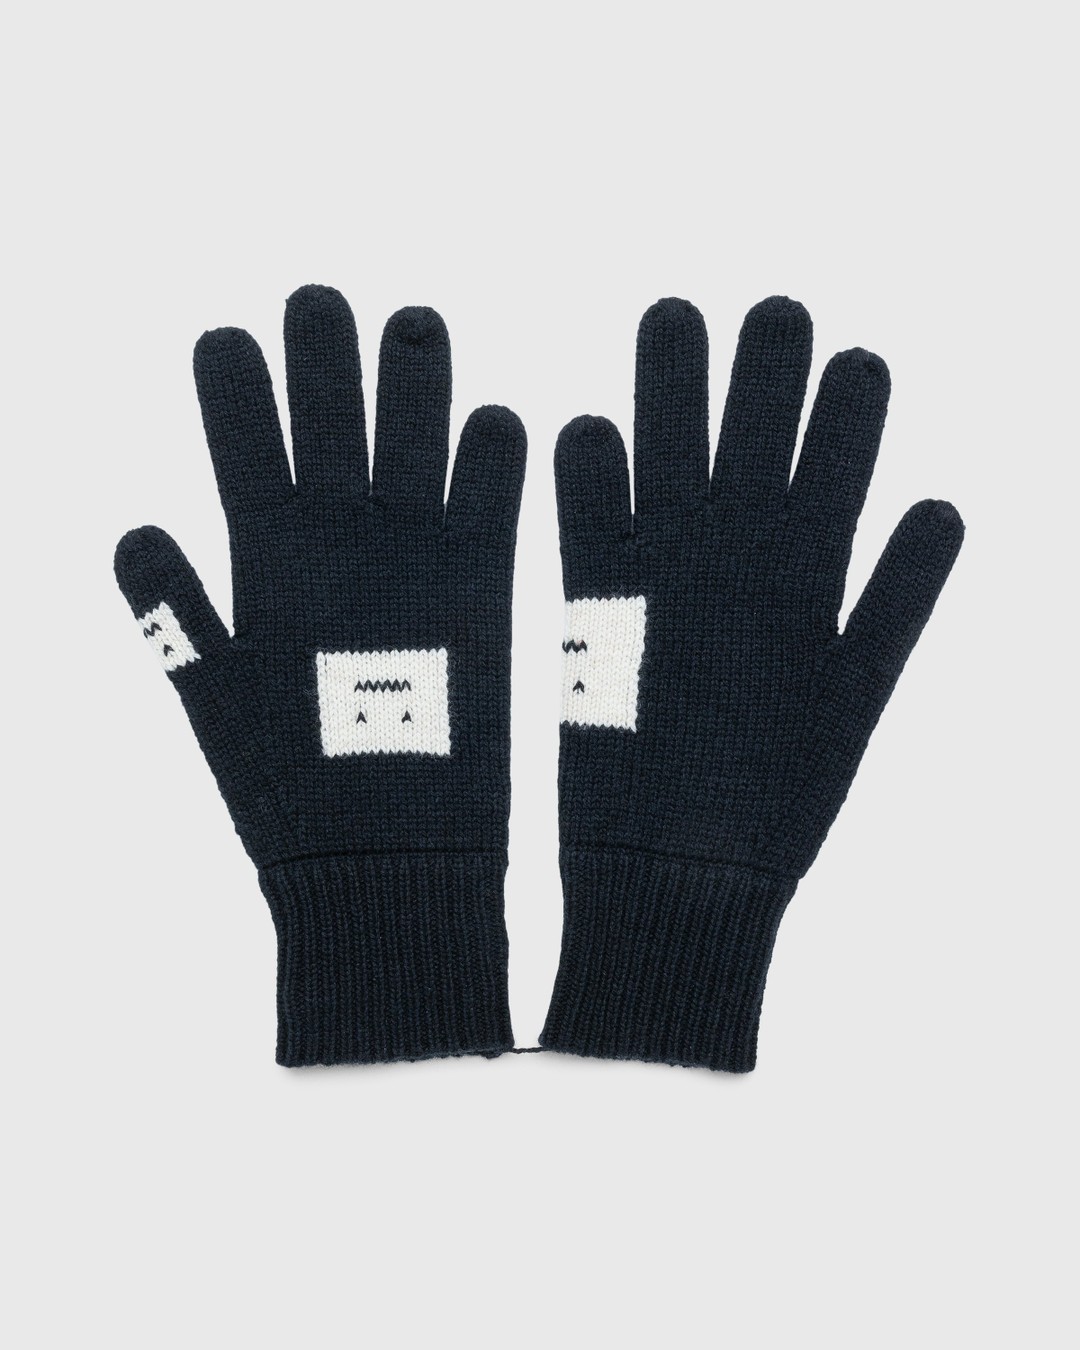 Acne Studios – Knit Gloves Black/Oatmeal Melange - 5-Finger - Black - Image 1